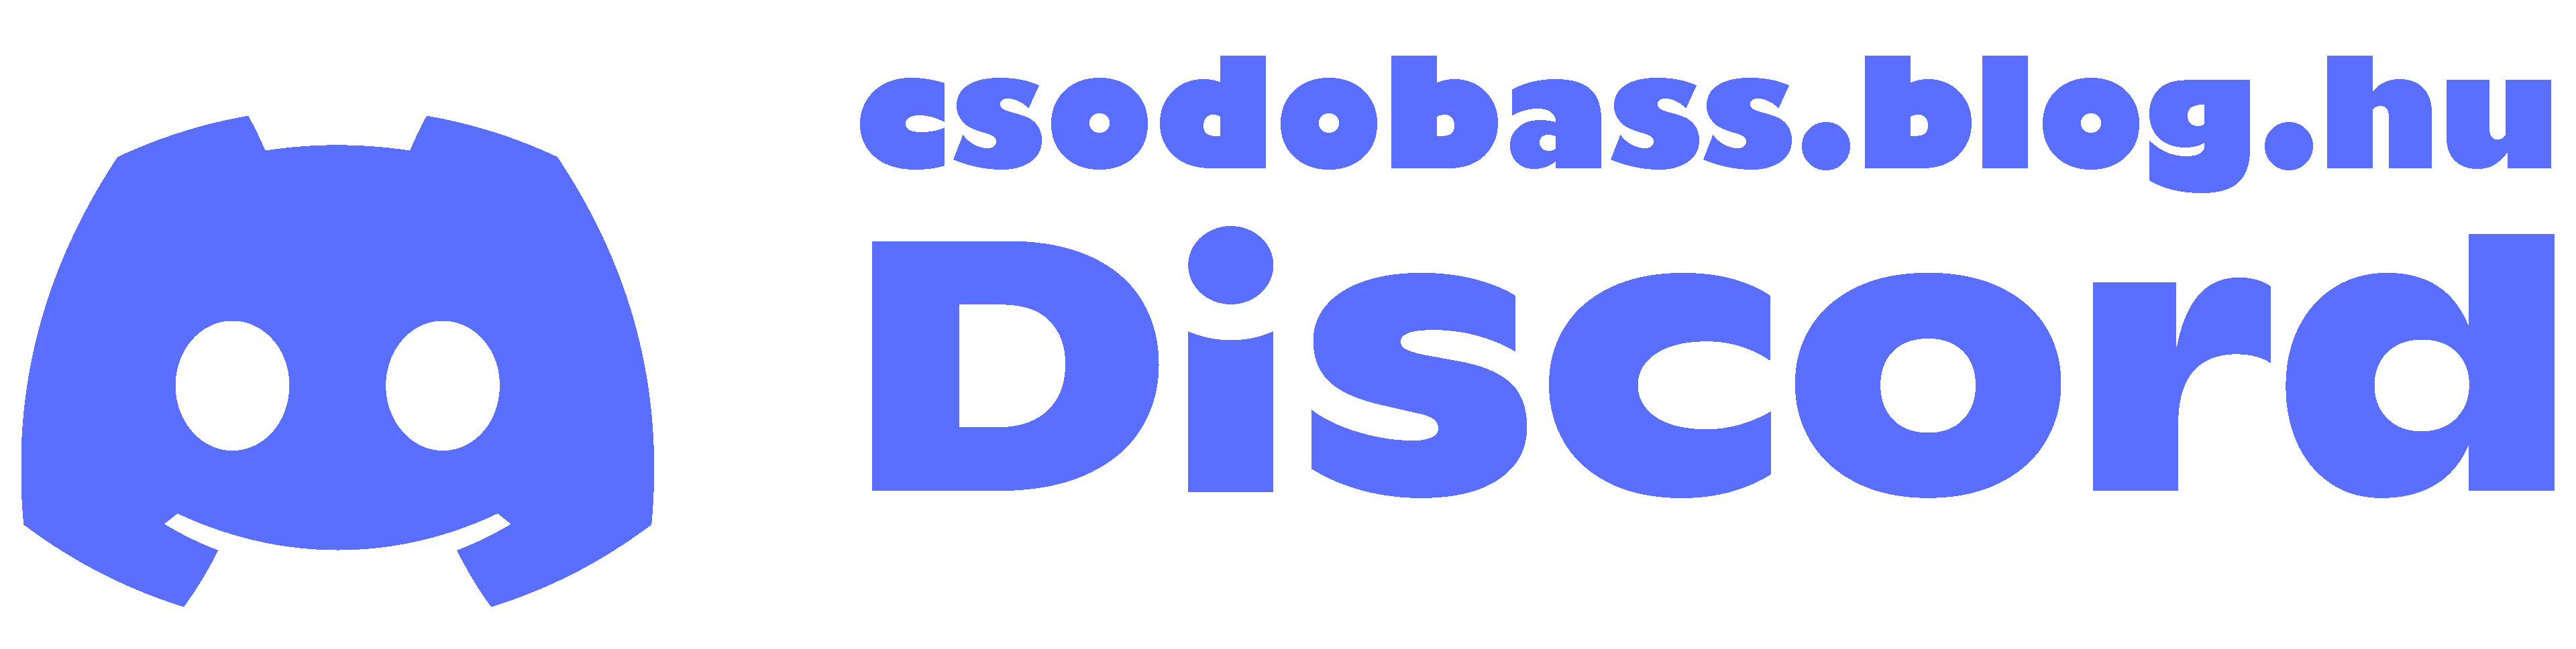 discord-logo02b.png